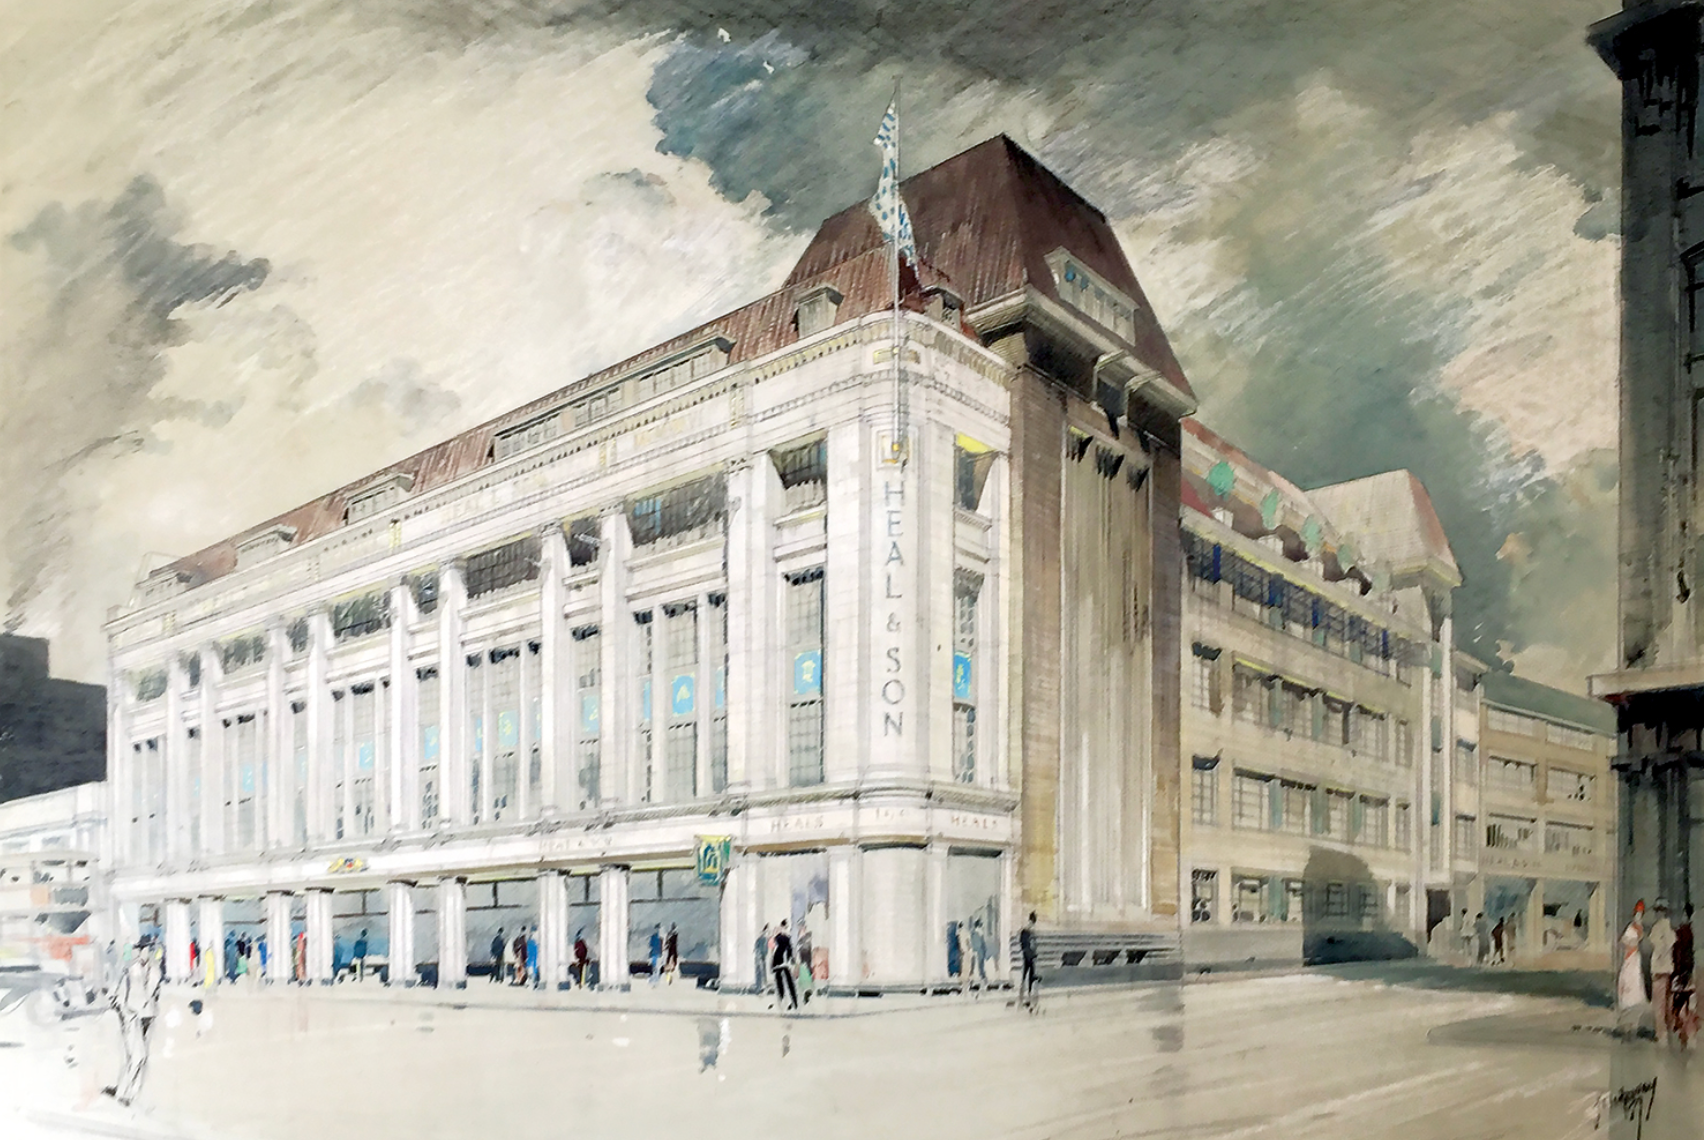 Heal's: Spearheading the Art Deco Revolution in London